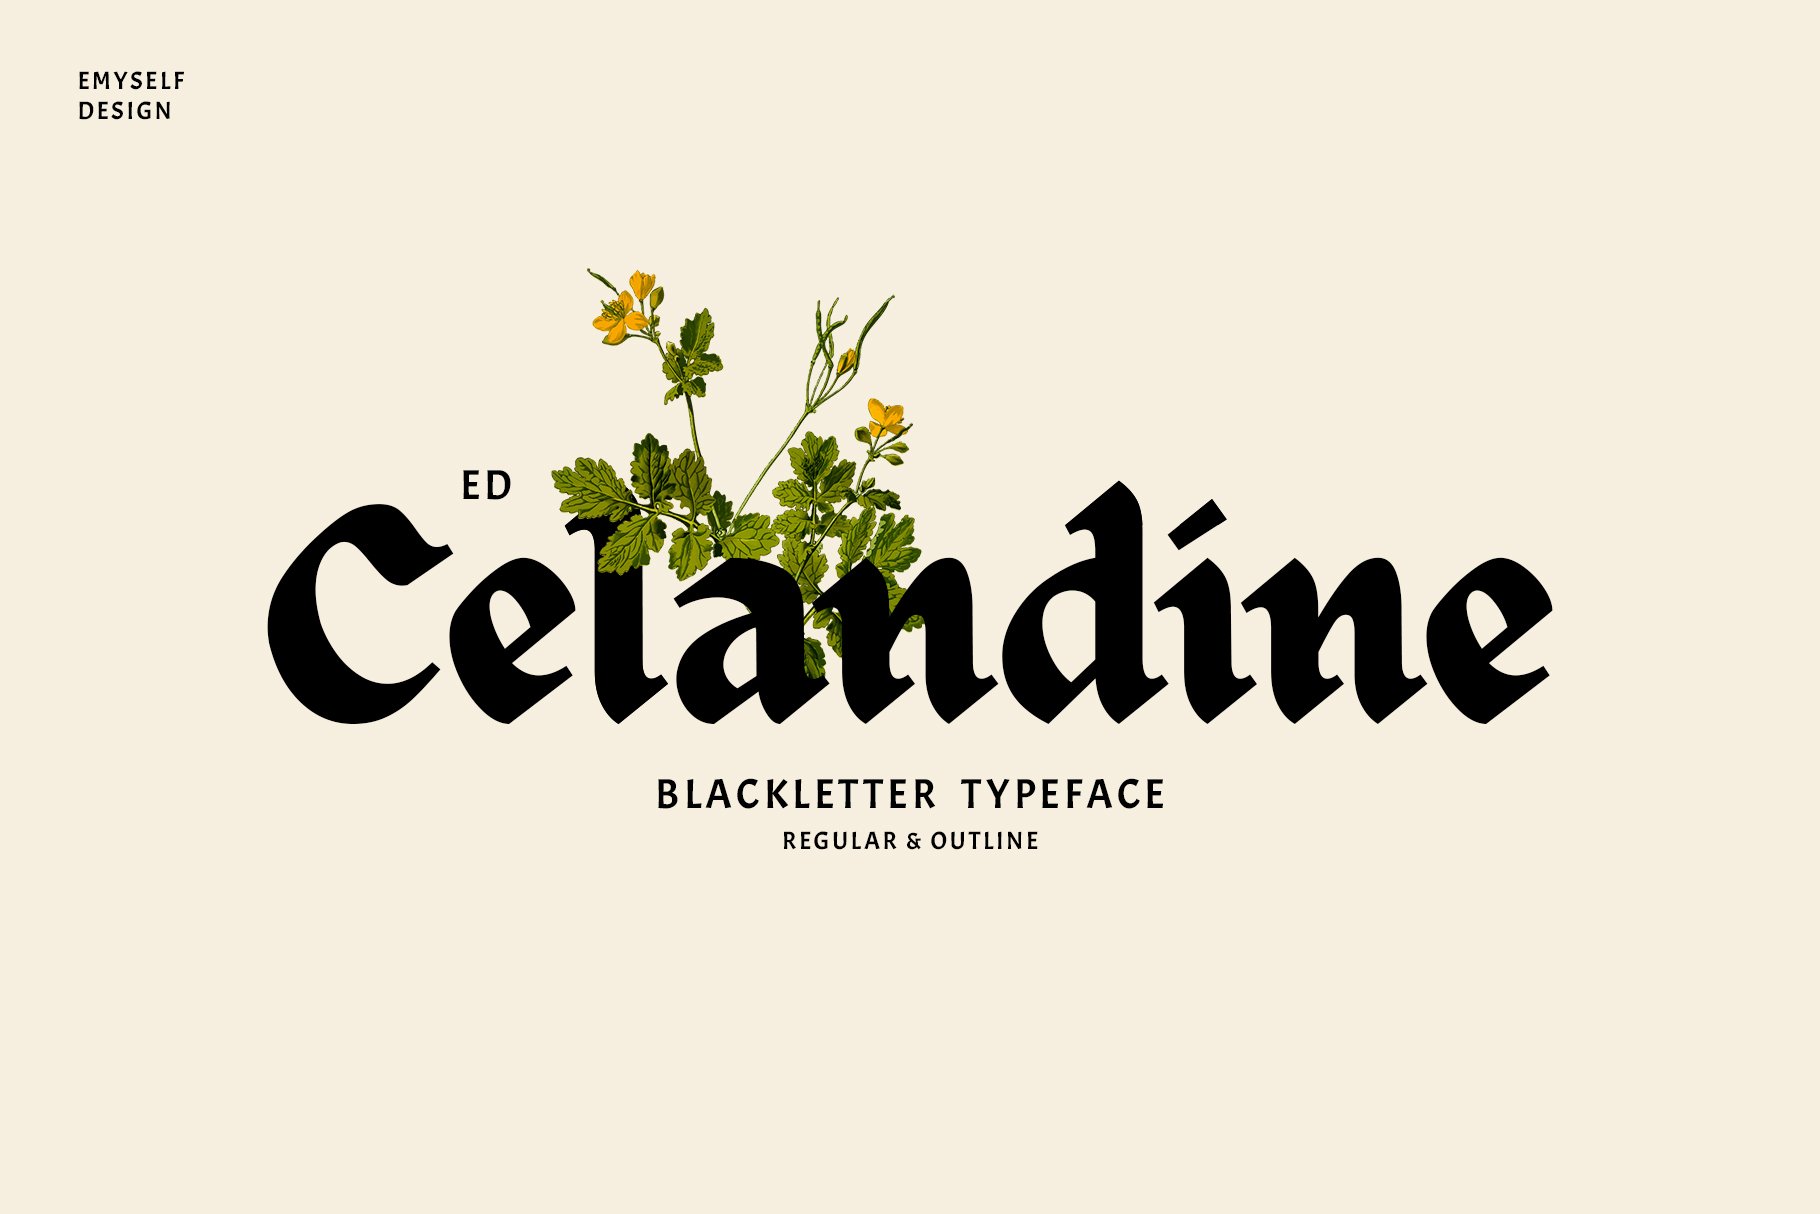 ED Celandine Typeface cover image.